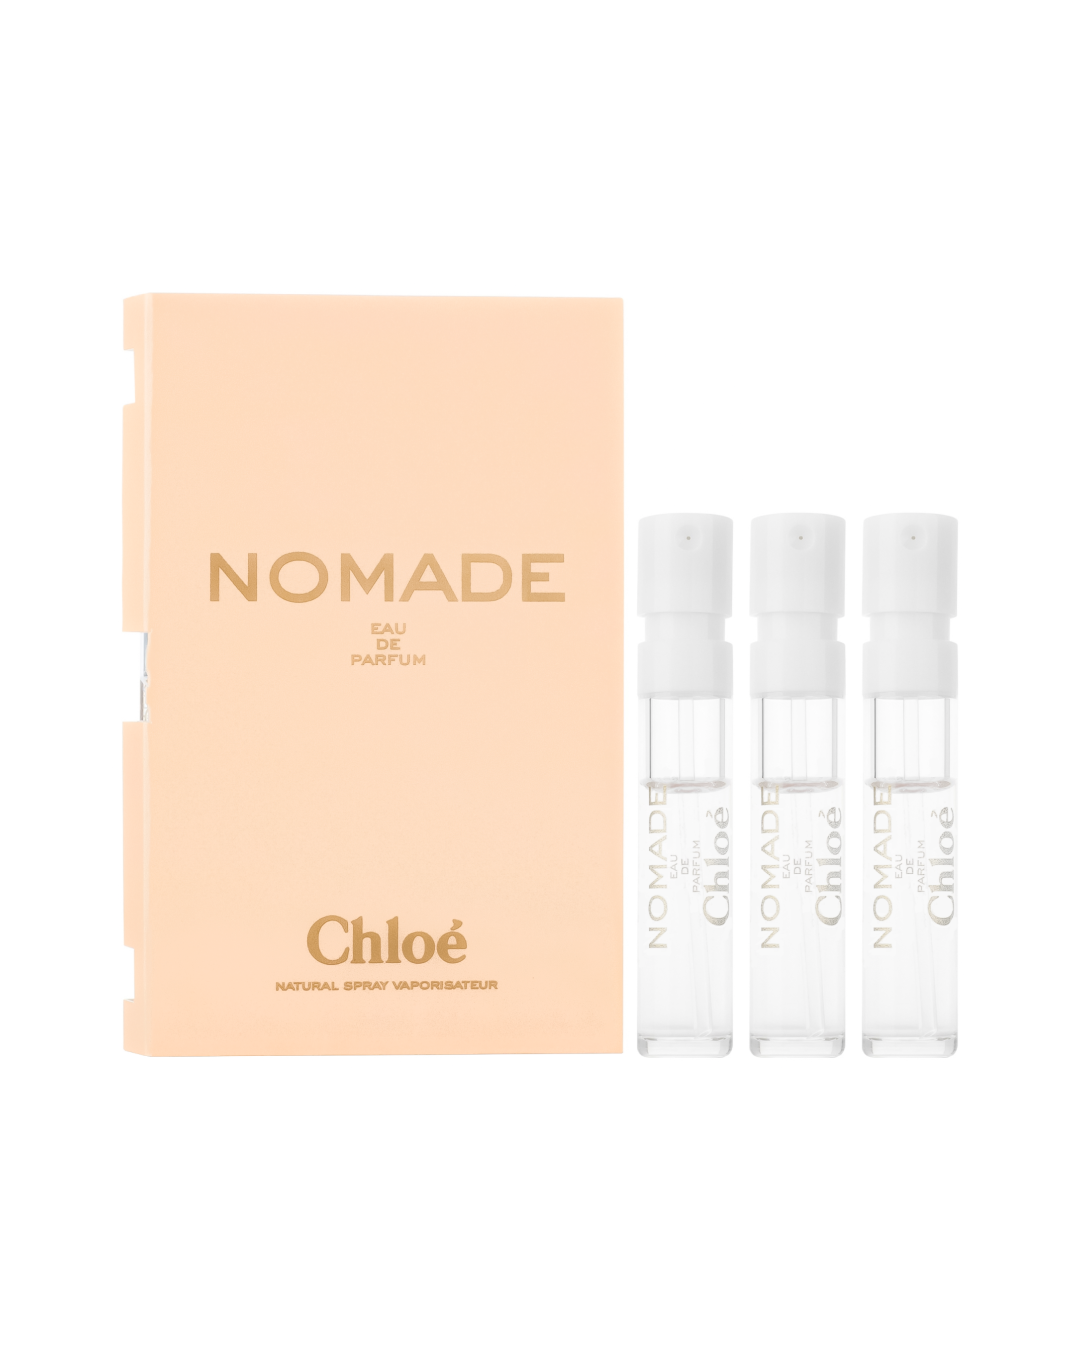 Chloe Chloe Nomade EDP Travel Vial (1.2ml x 3) - Best Buy World Philippines